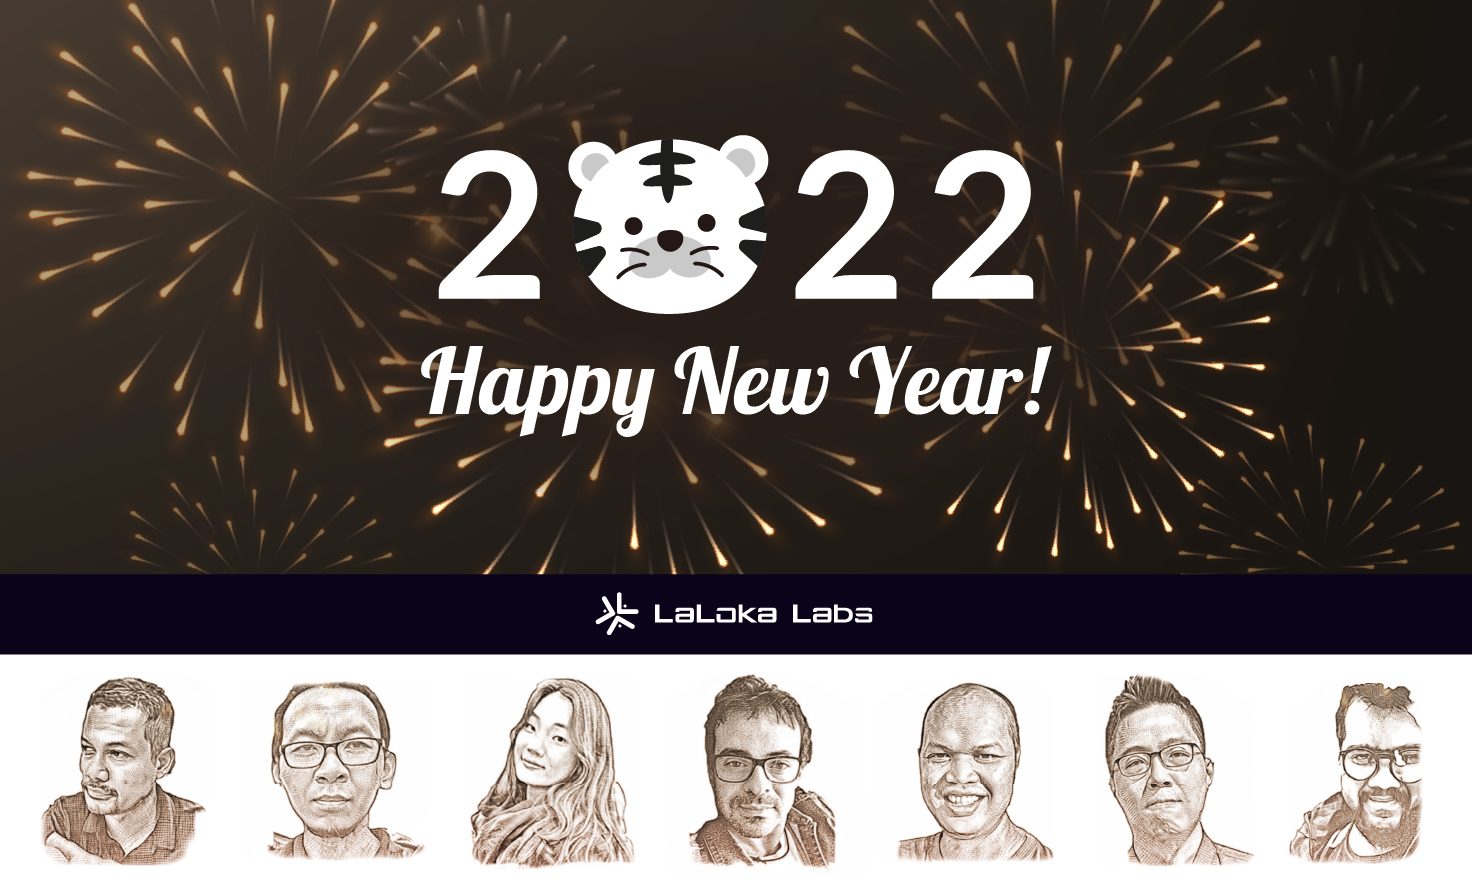 Happy New Year 2022 from LaLoka Labs